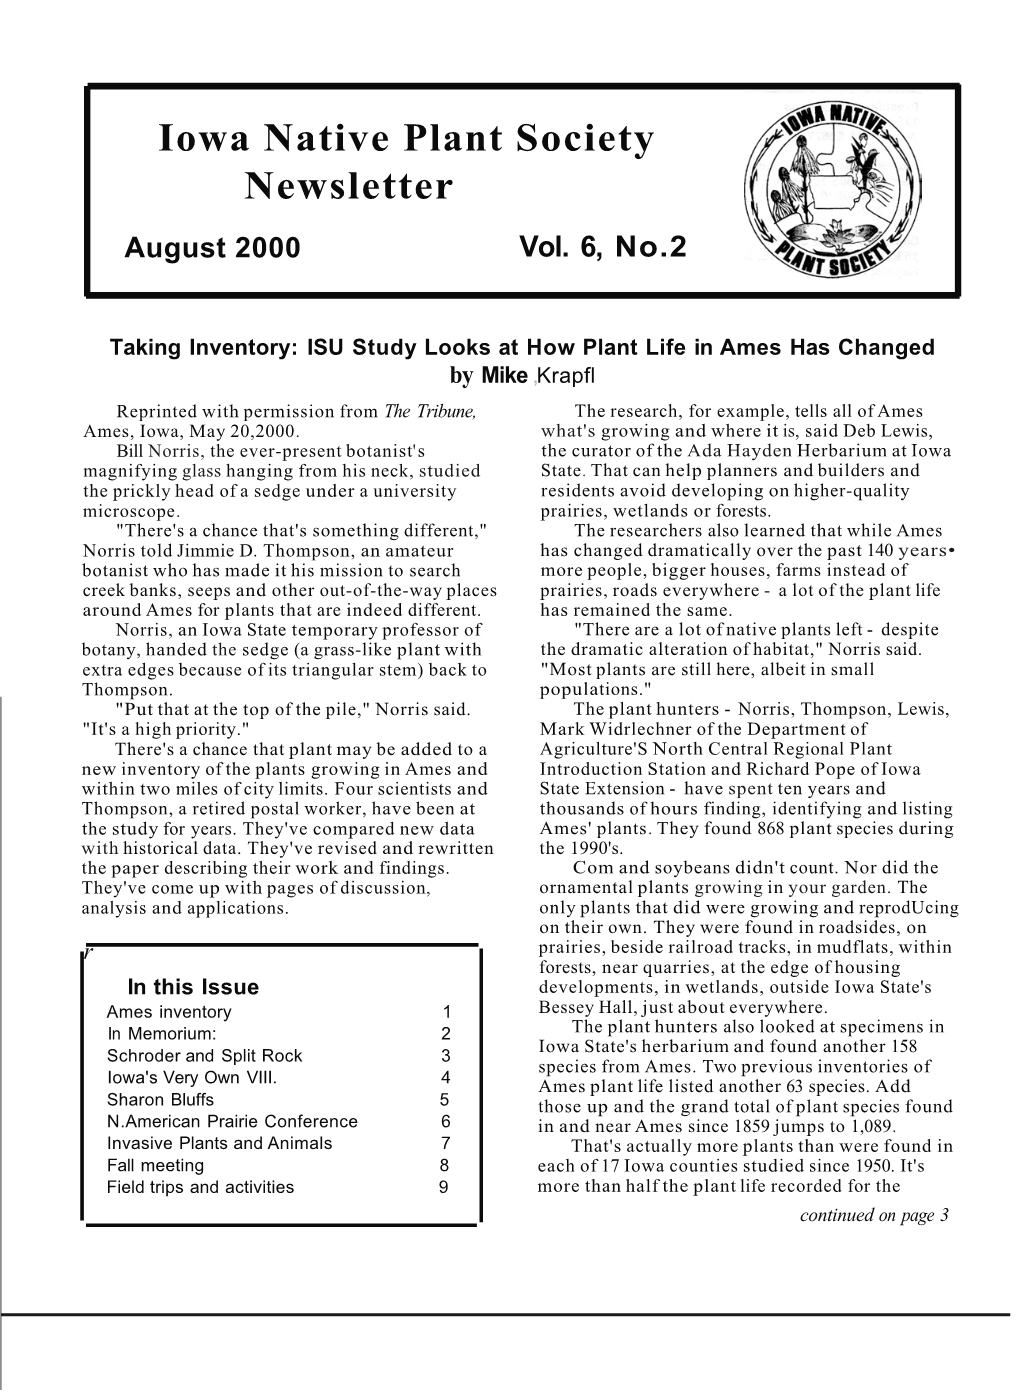 Iowa Native Plant Society Newsletter August 2000 Vol